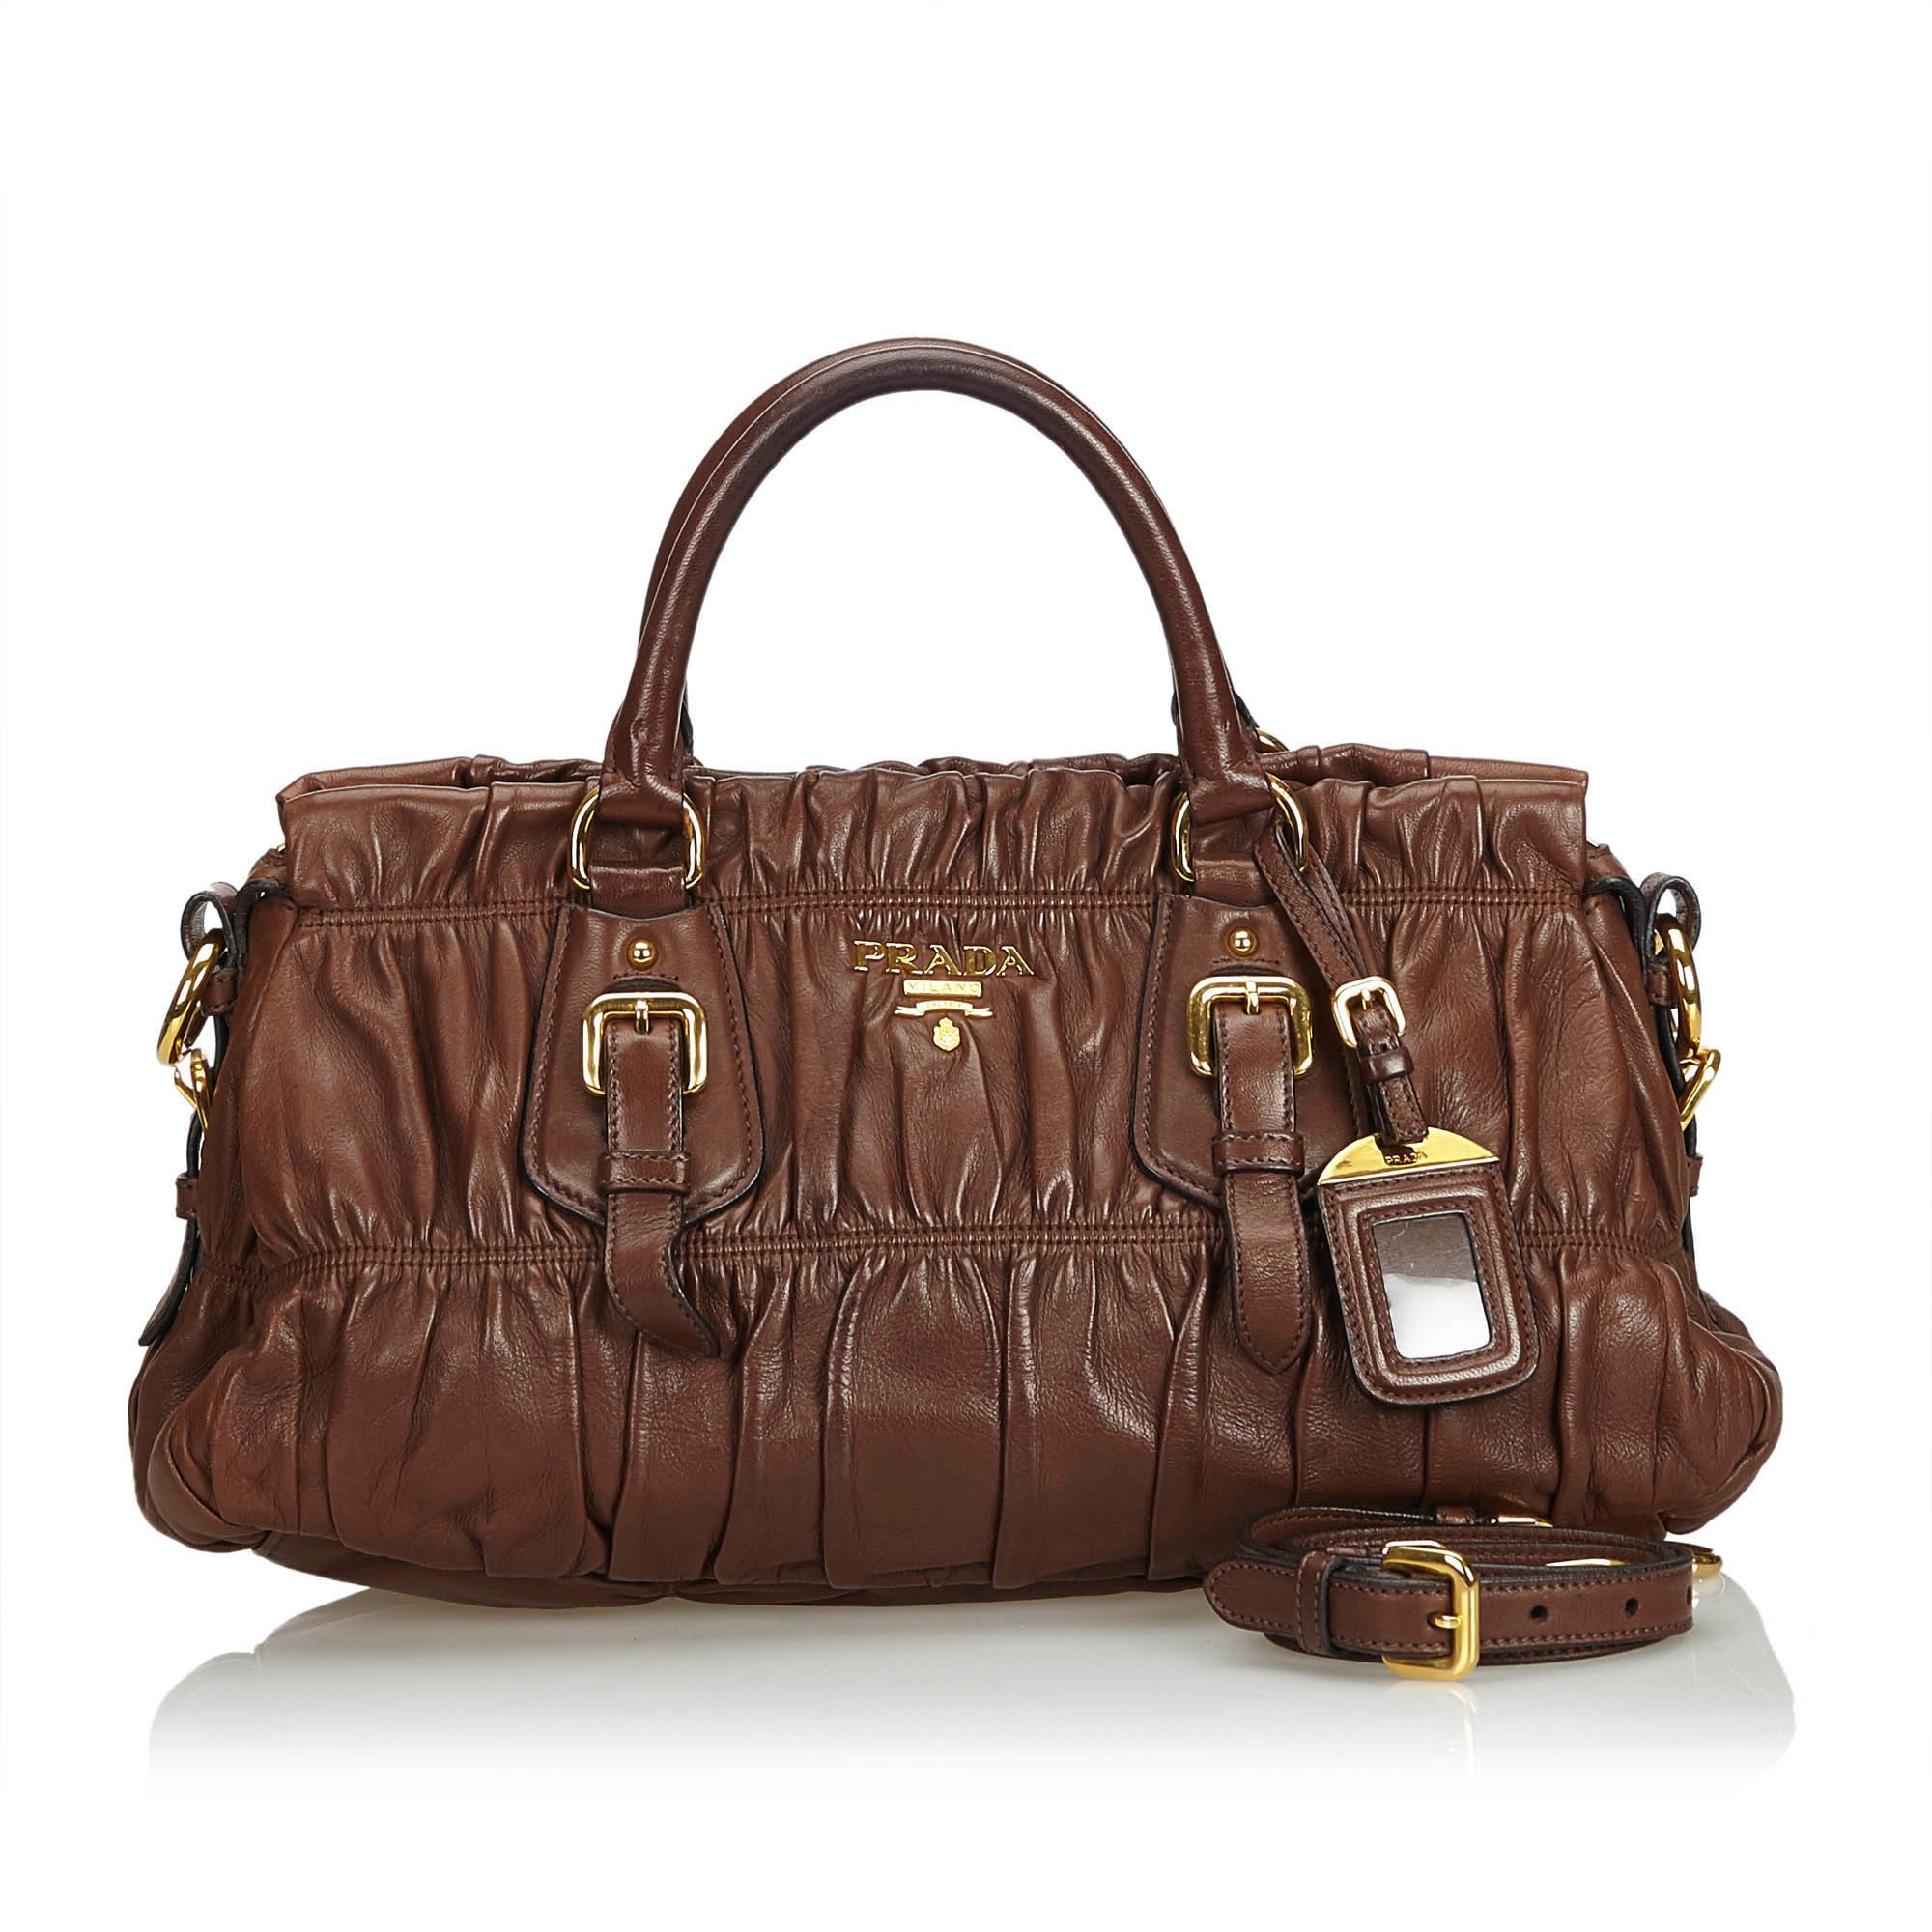 Prada Vintage - Gathered Leather Satchel Bag - Brown - Leather